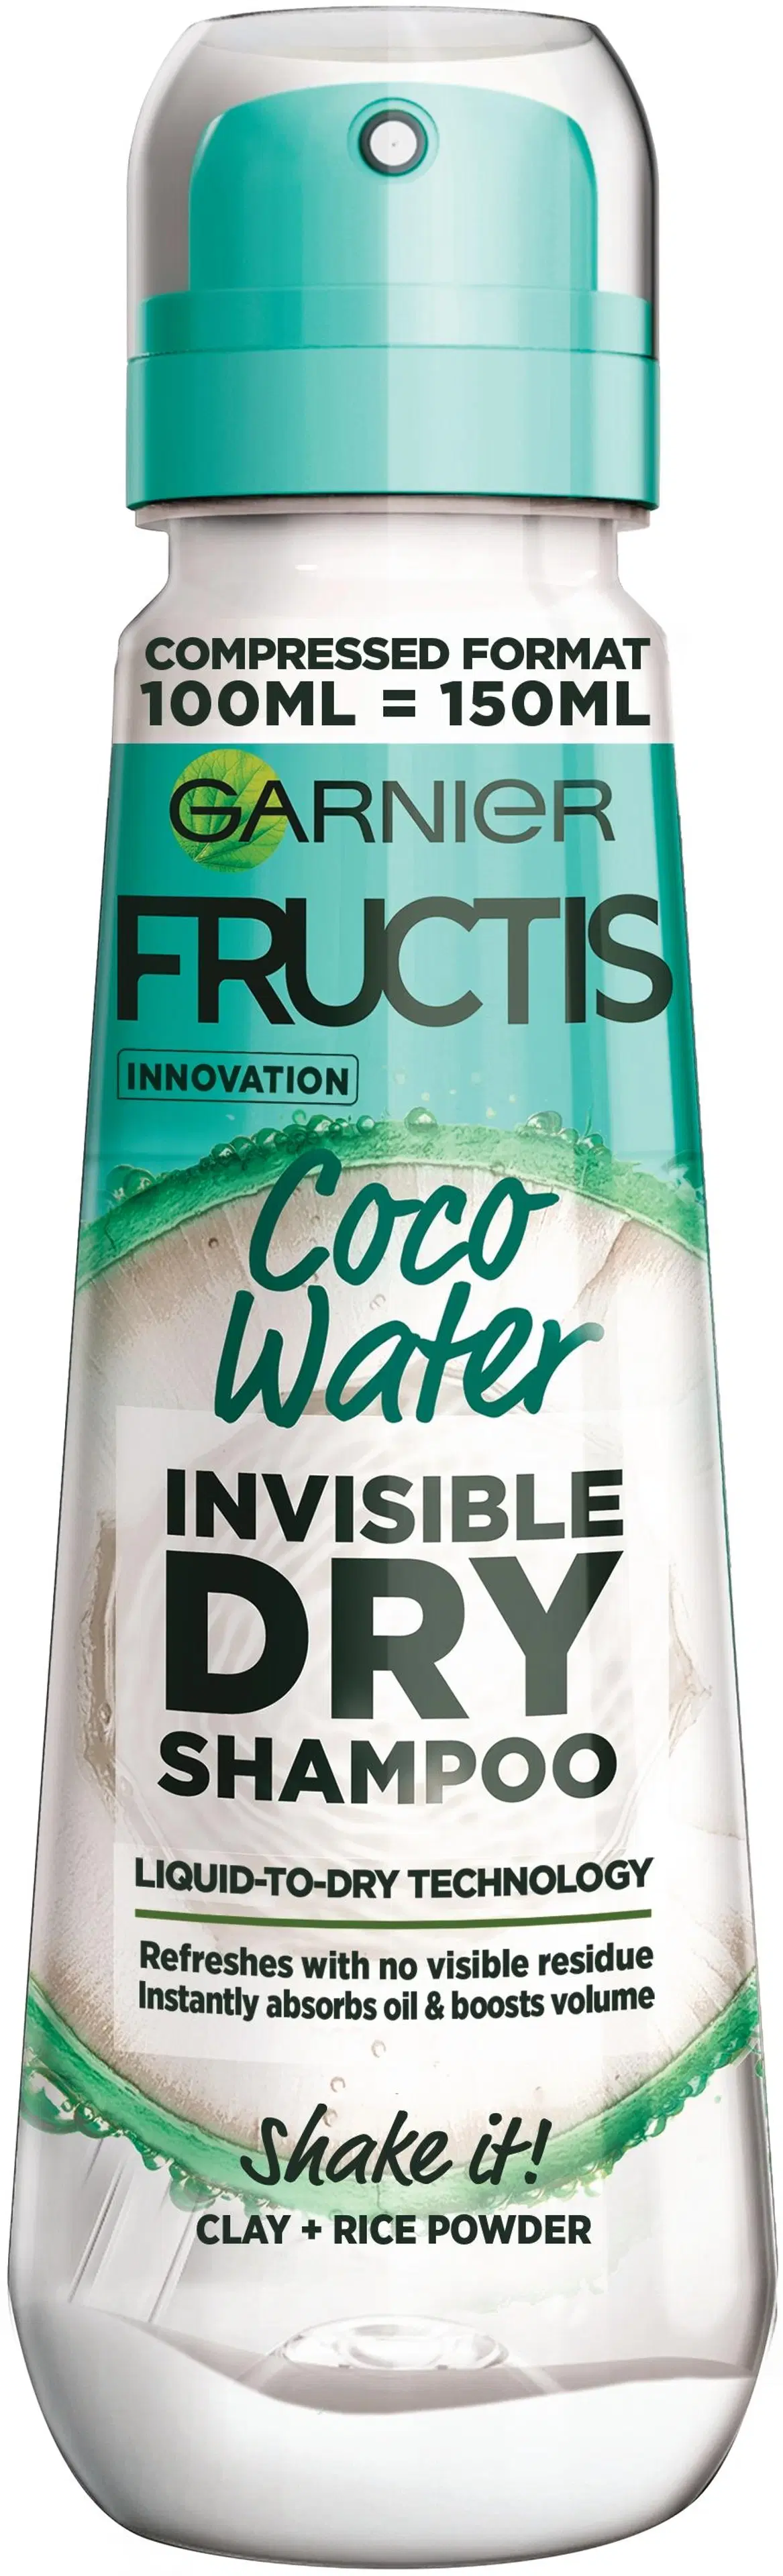 Garnier Fructis Invisible Dry Shampoo Coco kuivashampoo 100ml